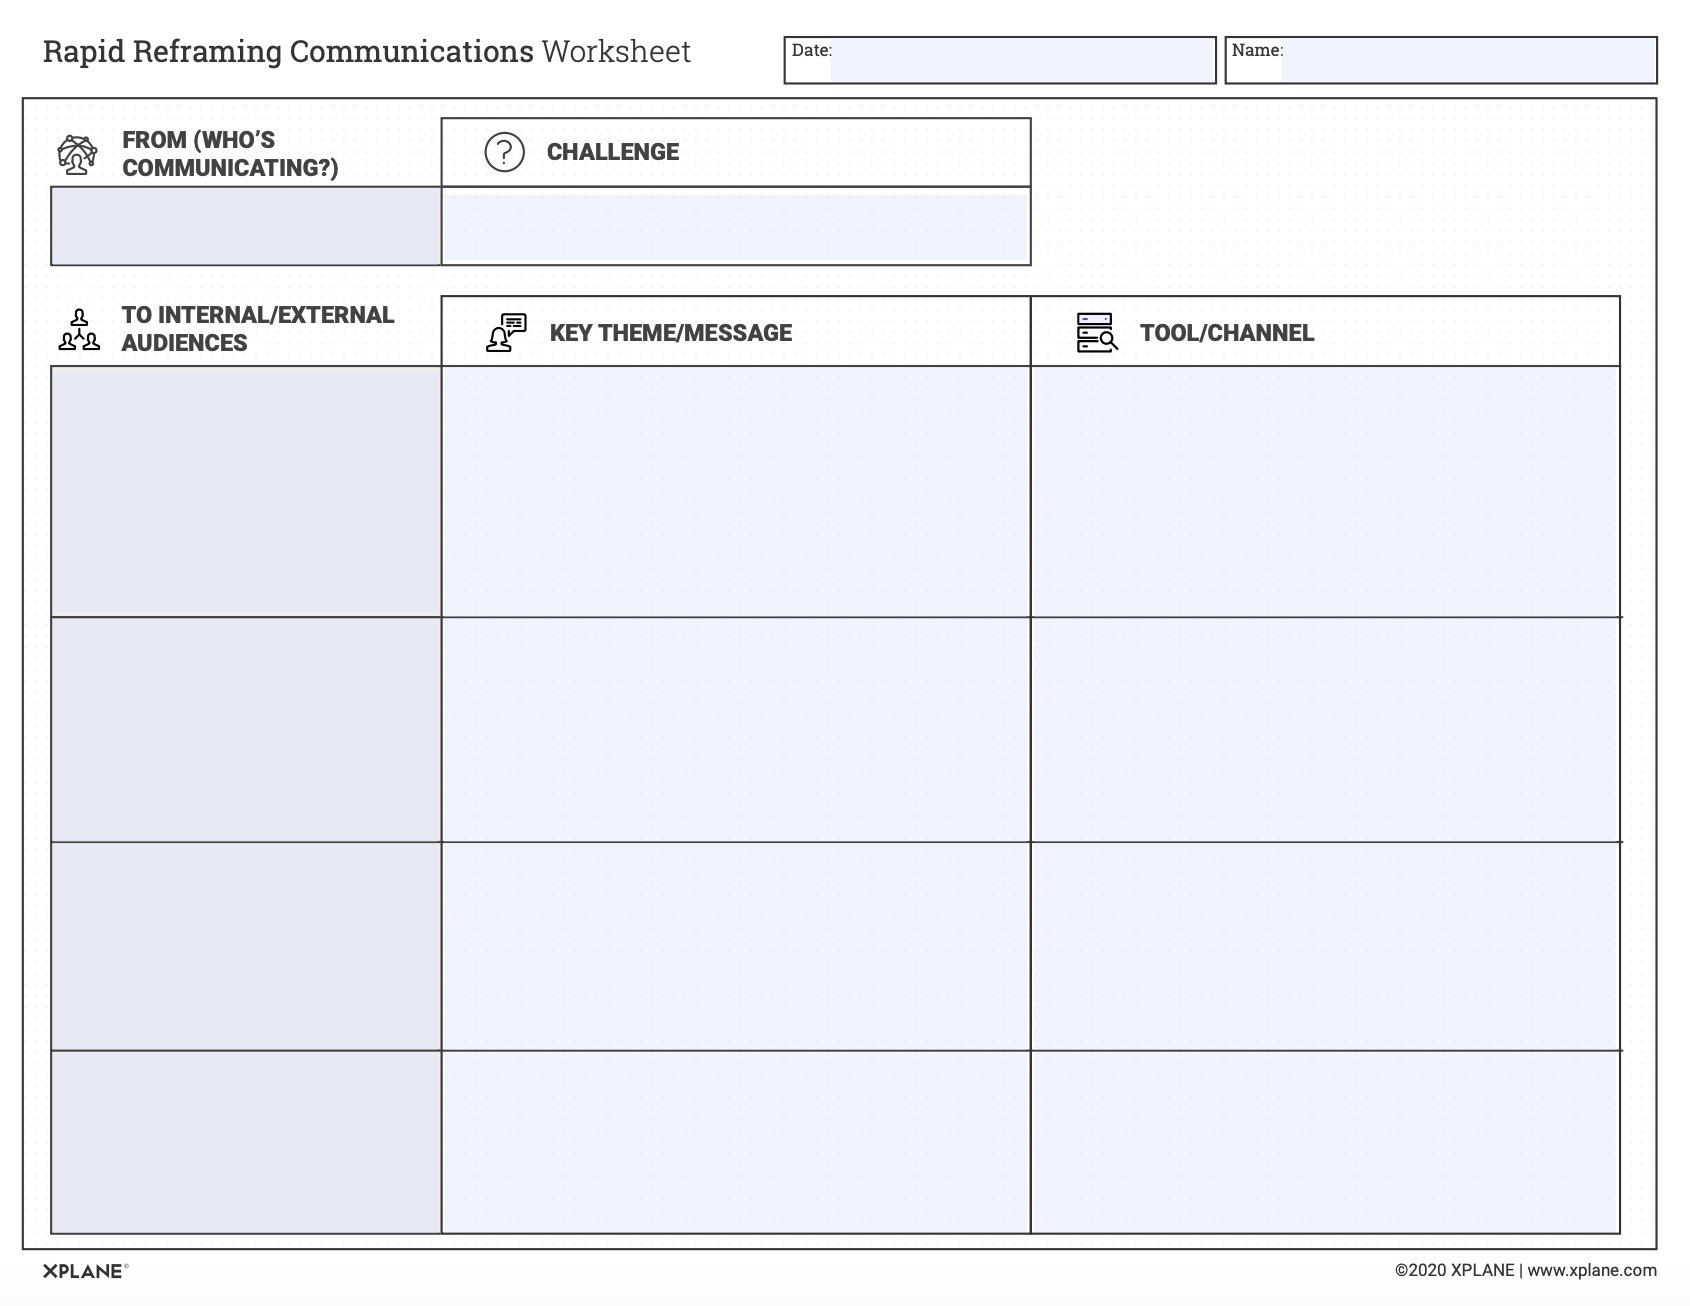 Rapid Reframing Communications Worksheet_Screenshot